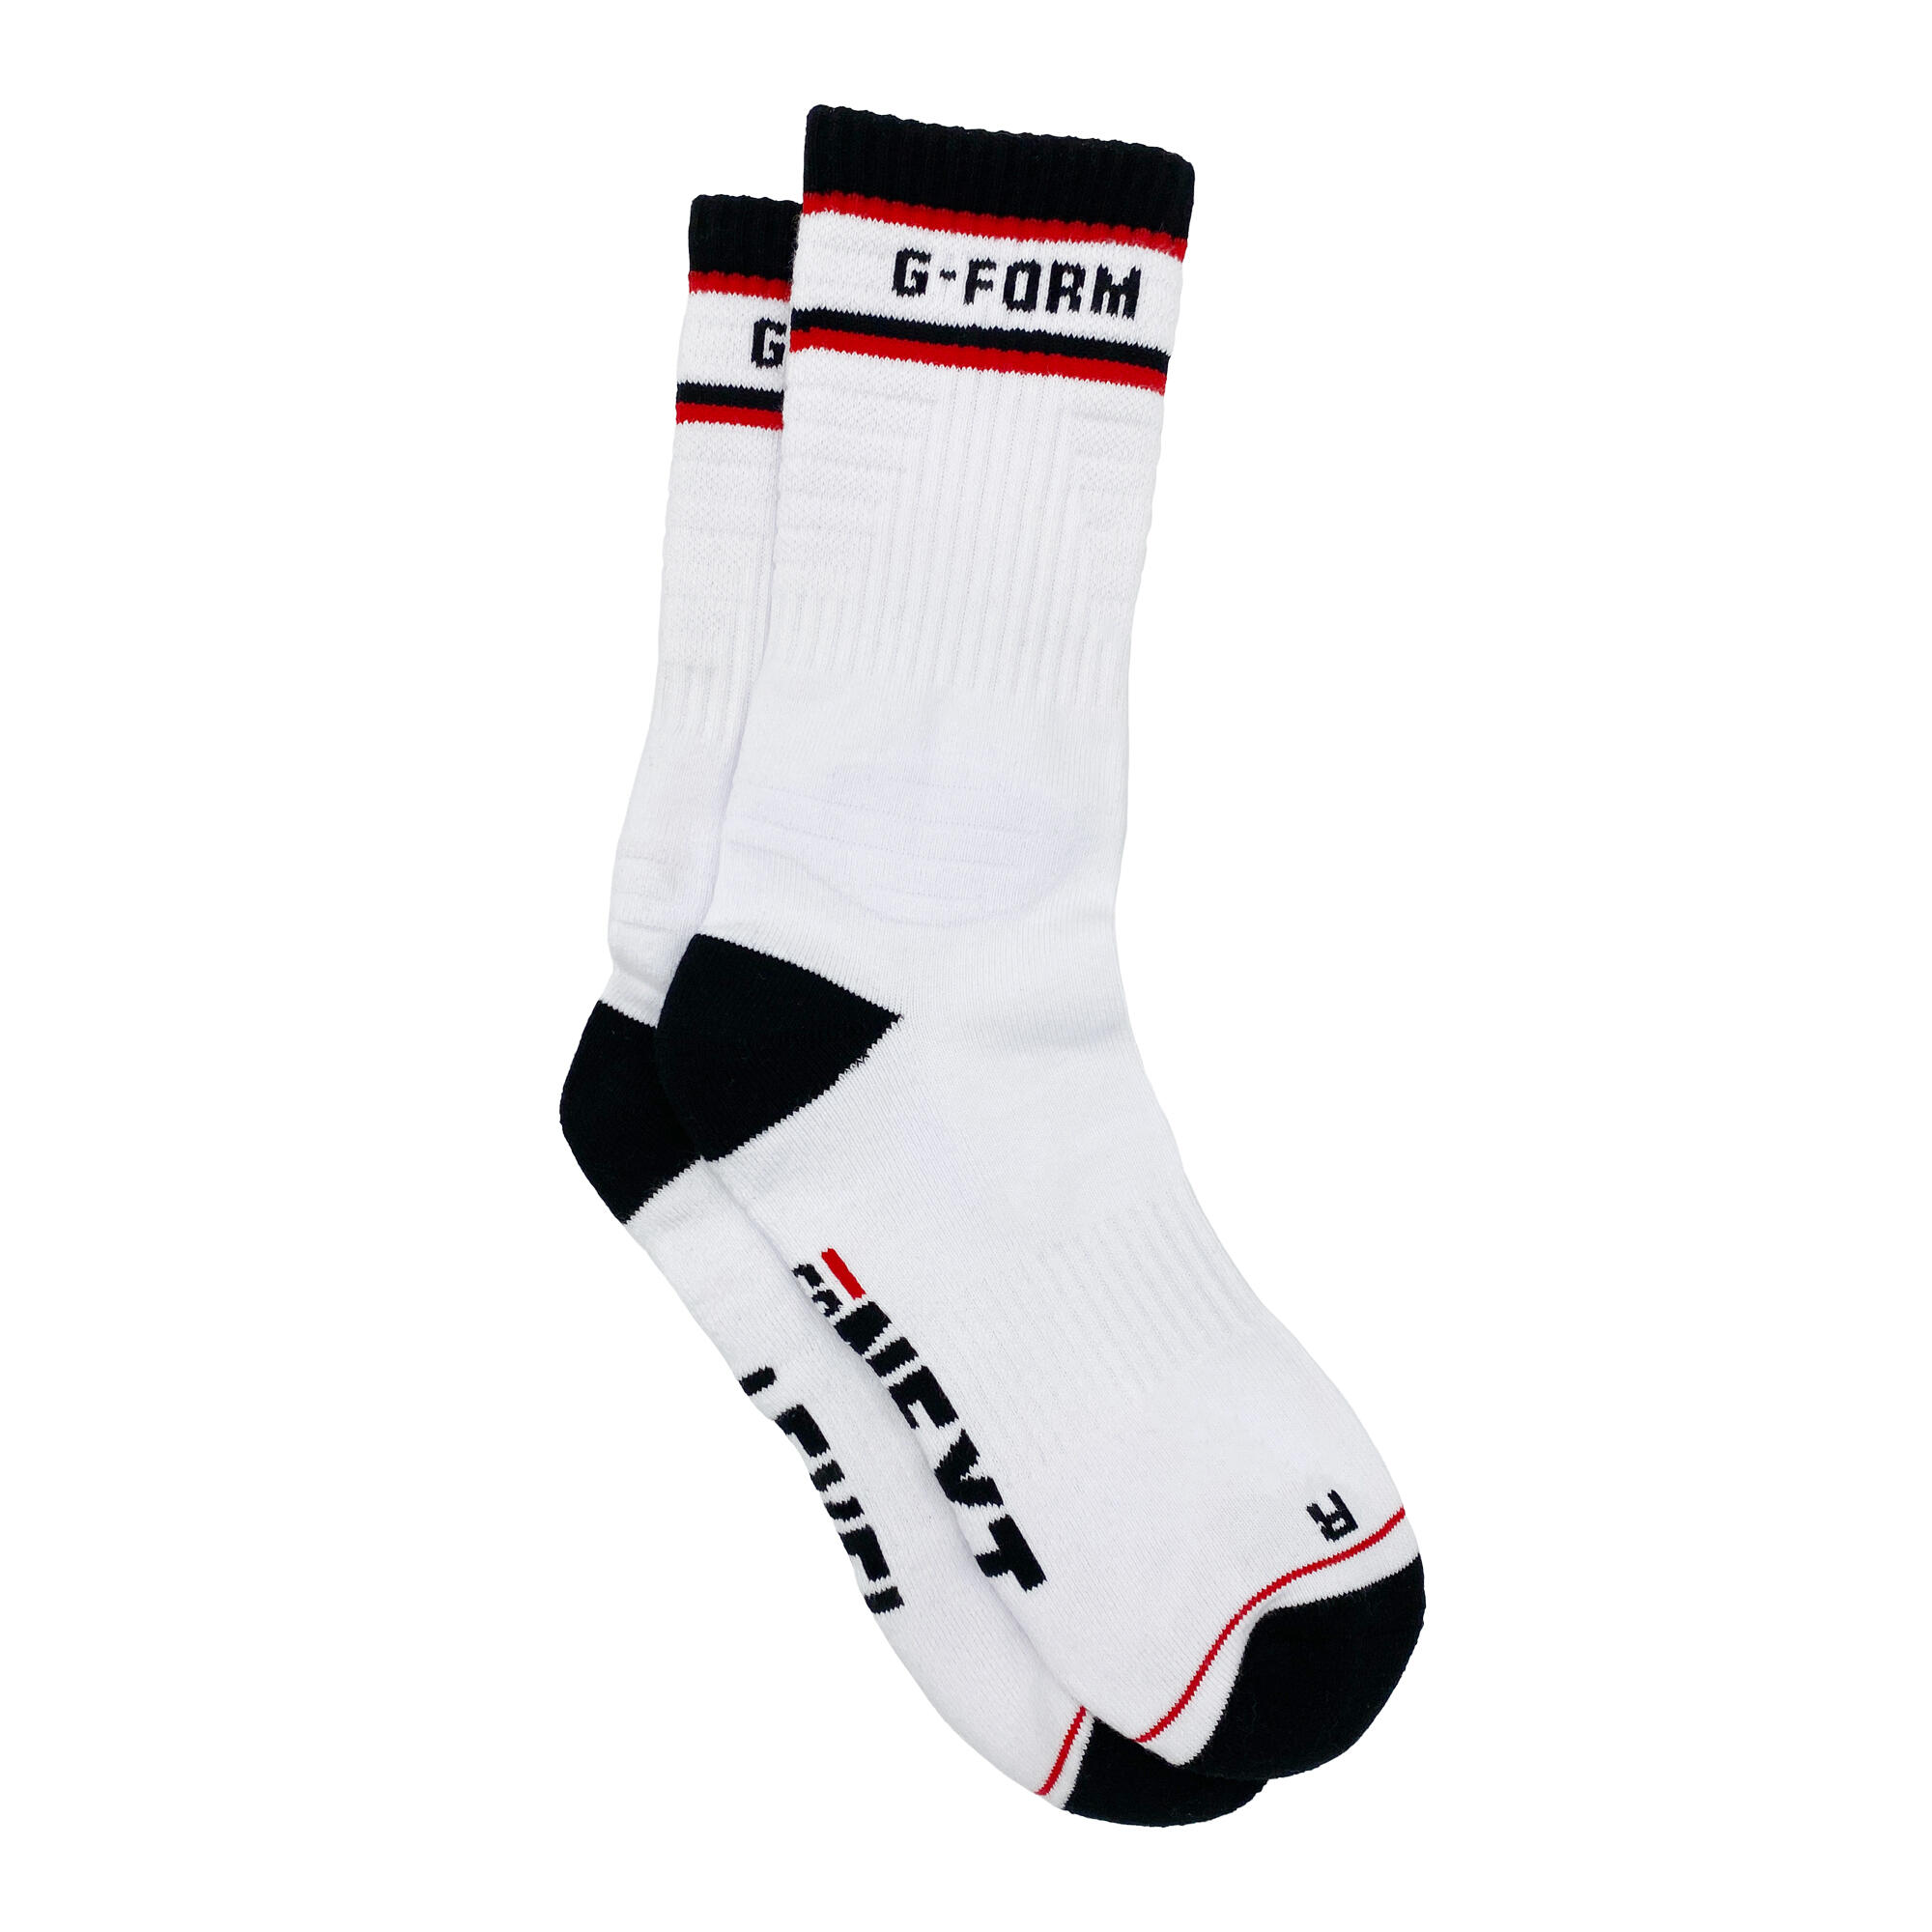 G-Form Mid-Calf Sock White Black Red S/M 1/3